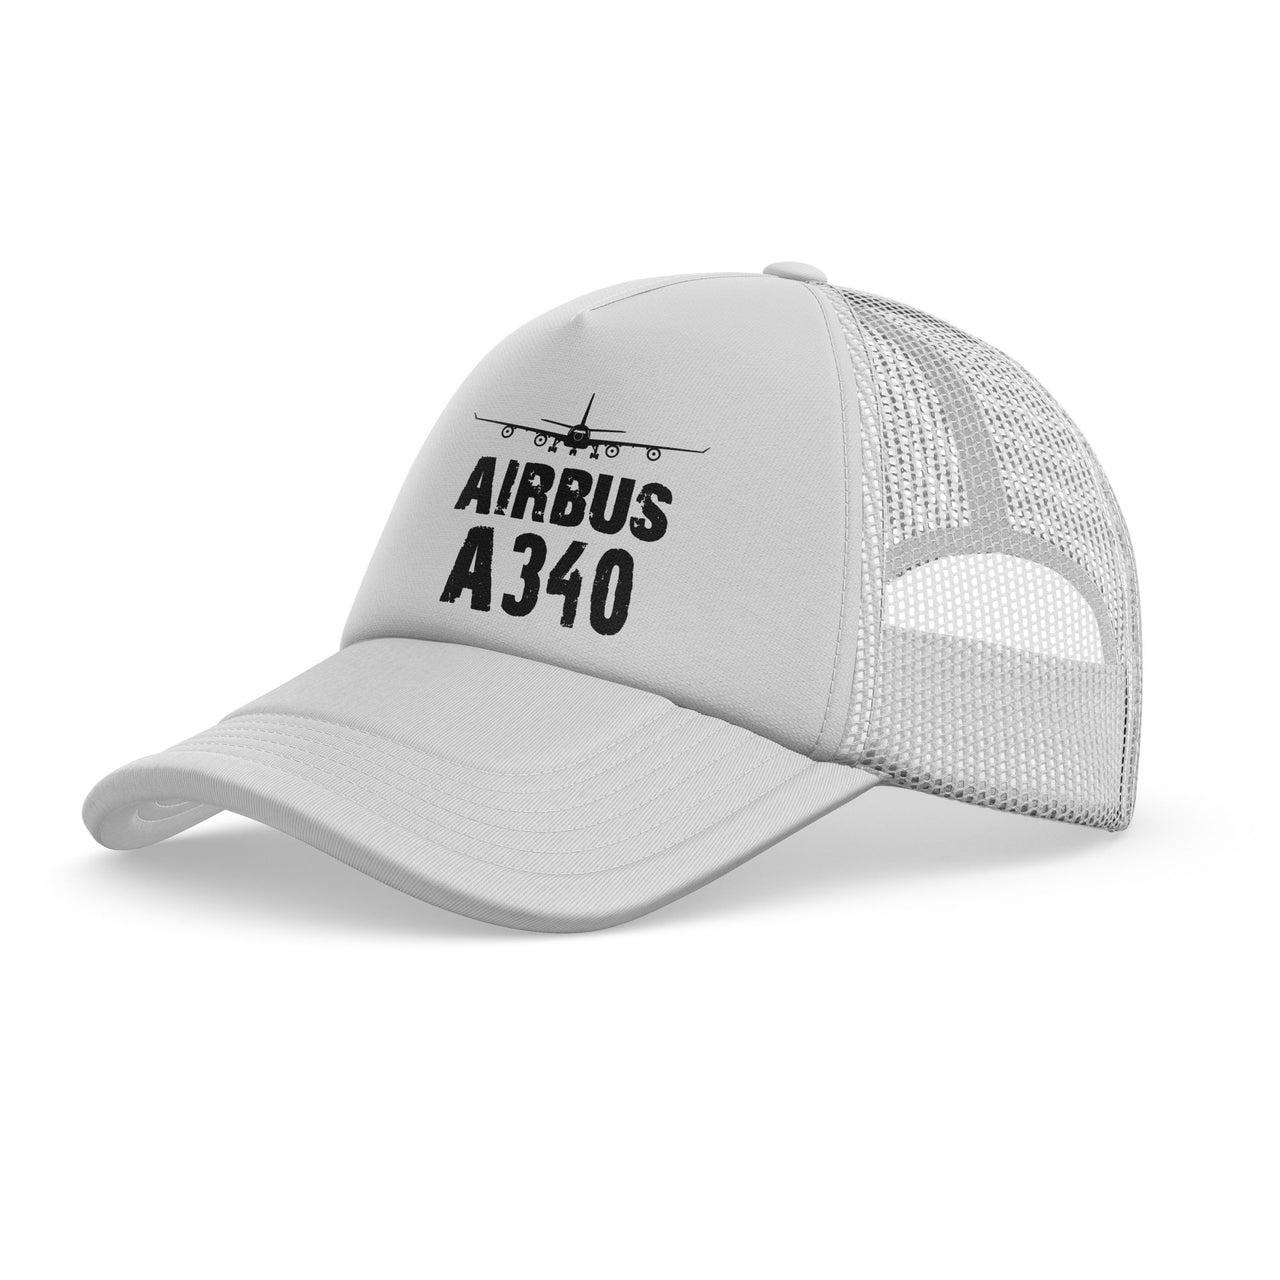 Airbus A340 & Plane Designed Trucker Caps & Hats